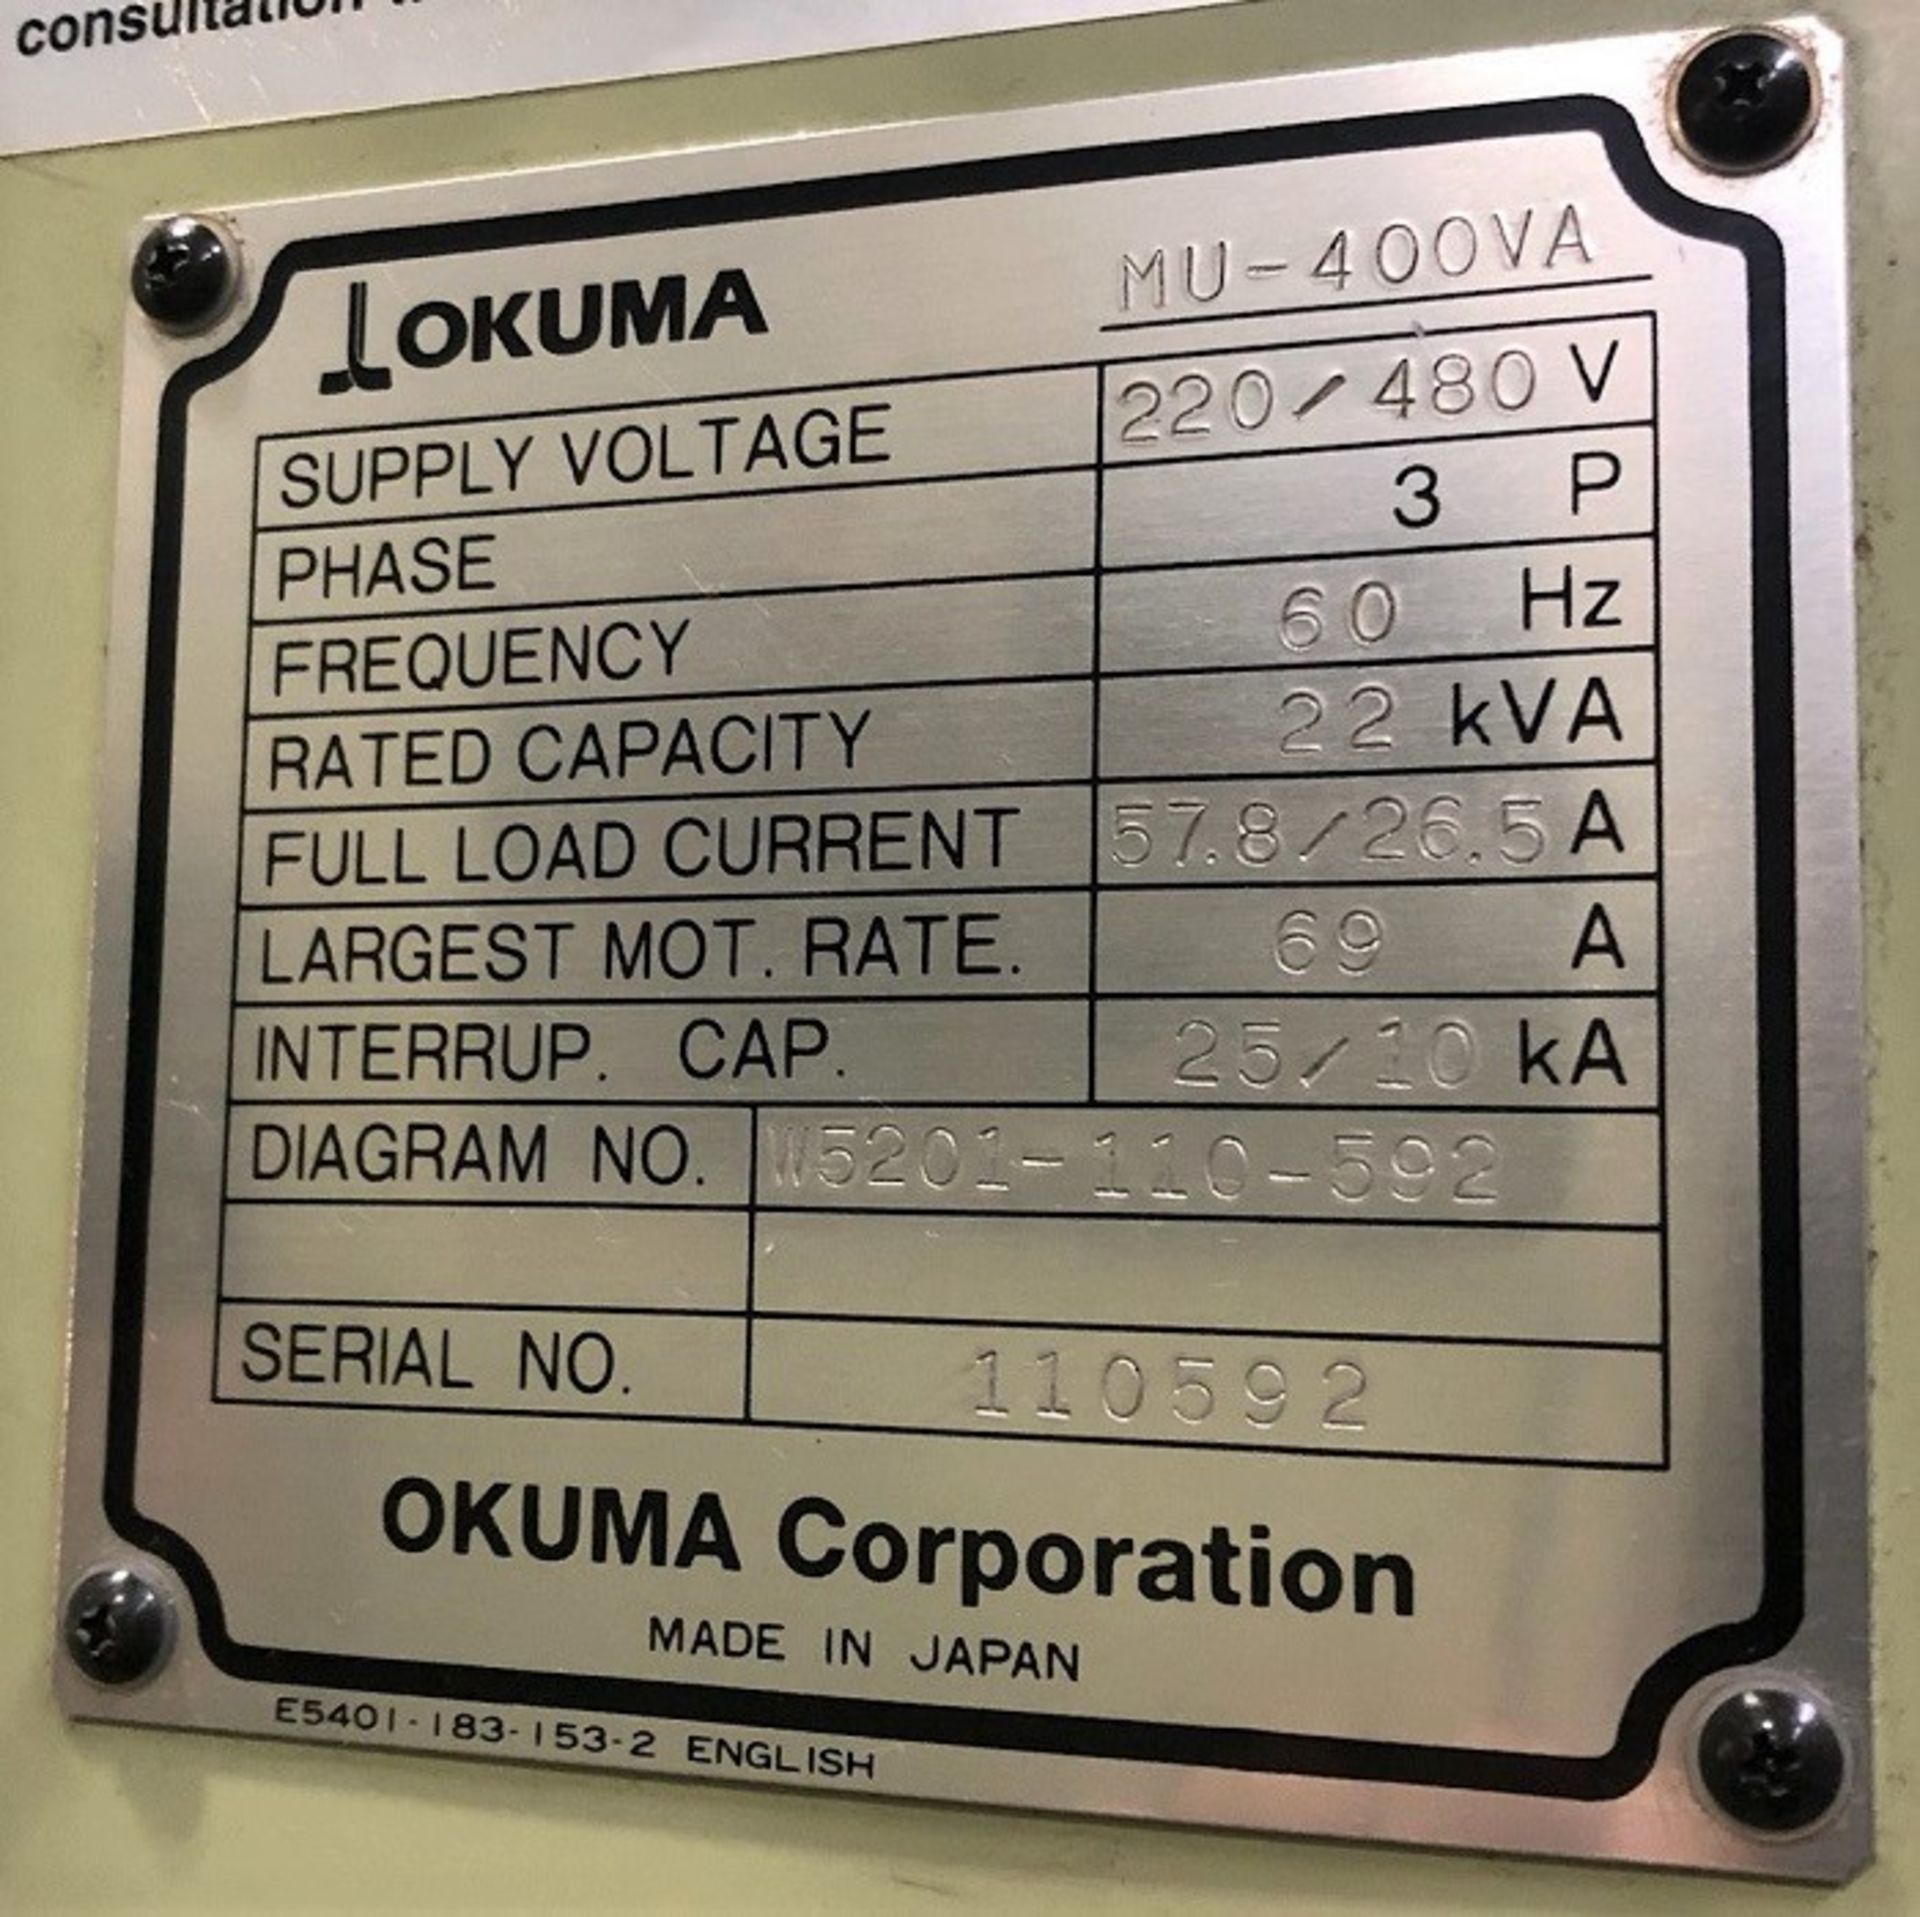 OKUMA MODEL MU-400VA, 5 AXIS FULL CONTOURING, CNC VMC, YEAR 2005, SN 110594 - Image 10 of 10